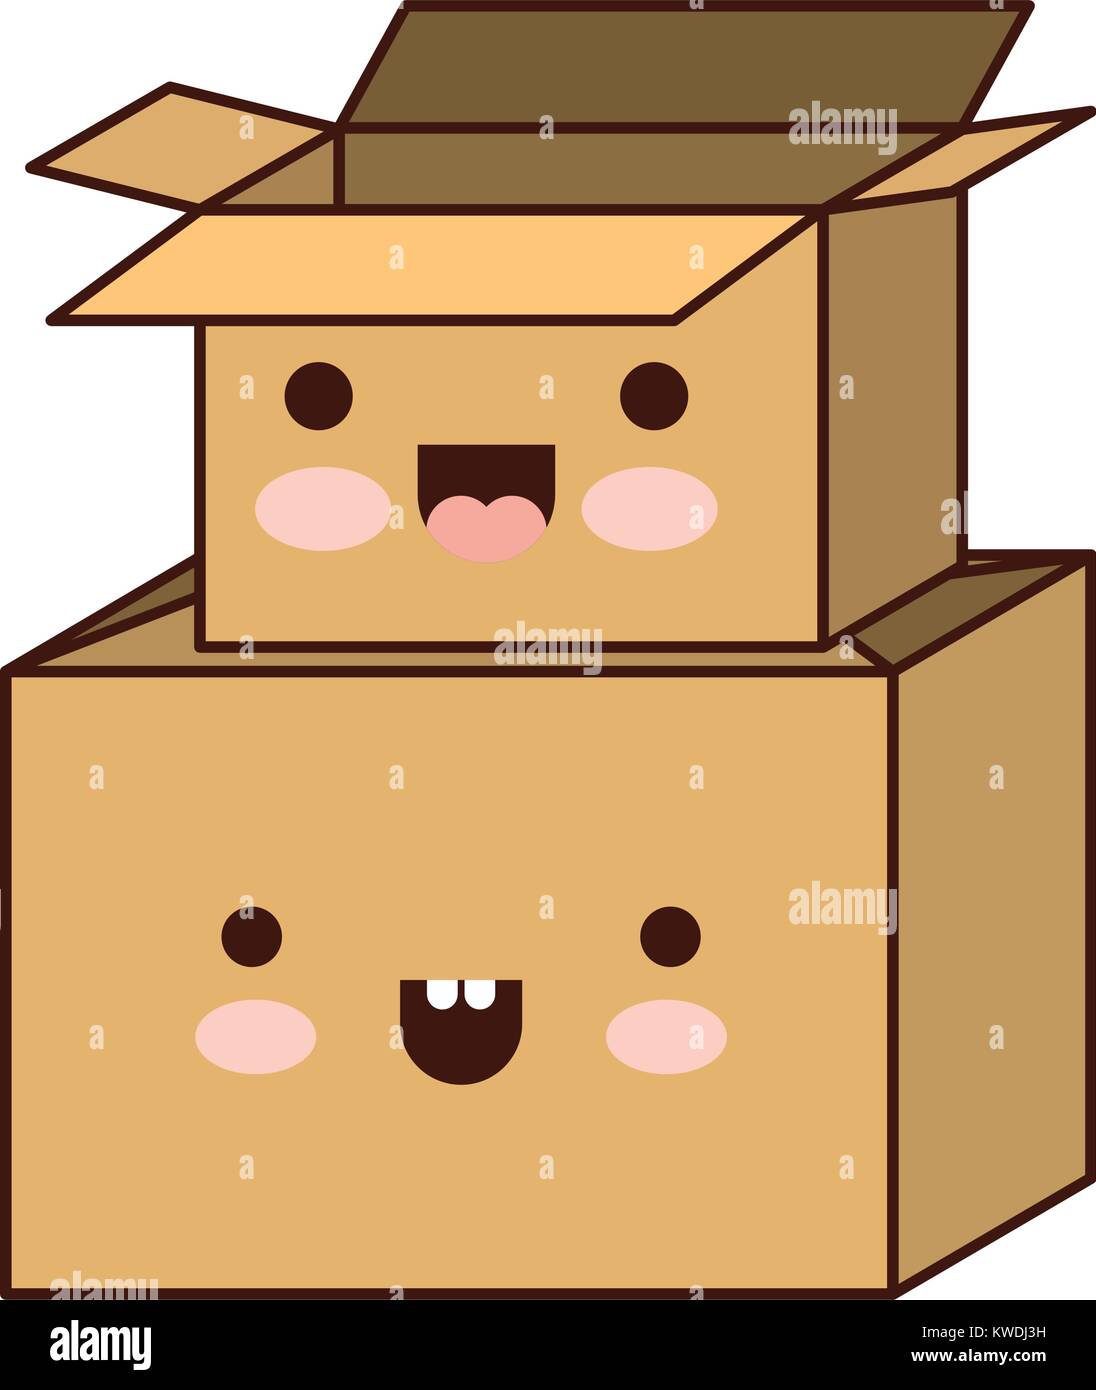 Kawaii cajas de cartón apiladas en la colorida silueta Imagen Vector de  stock - Alamy